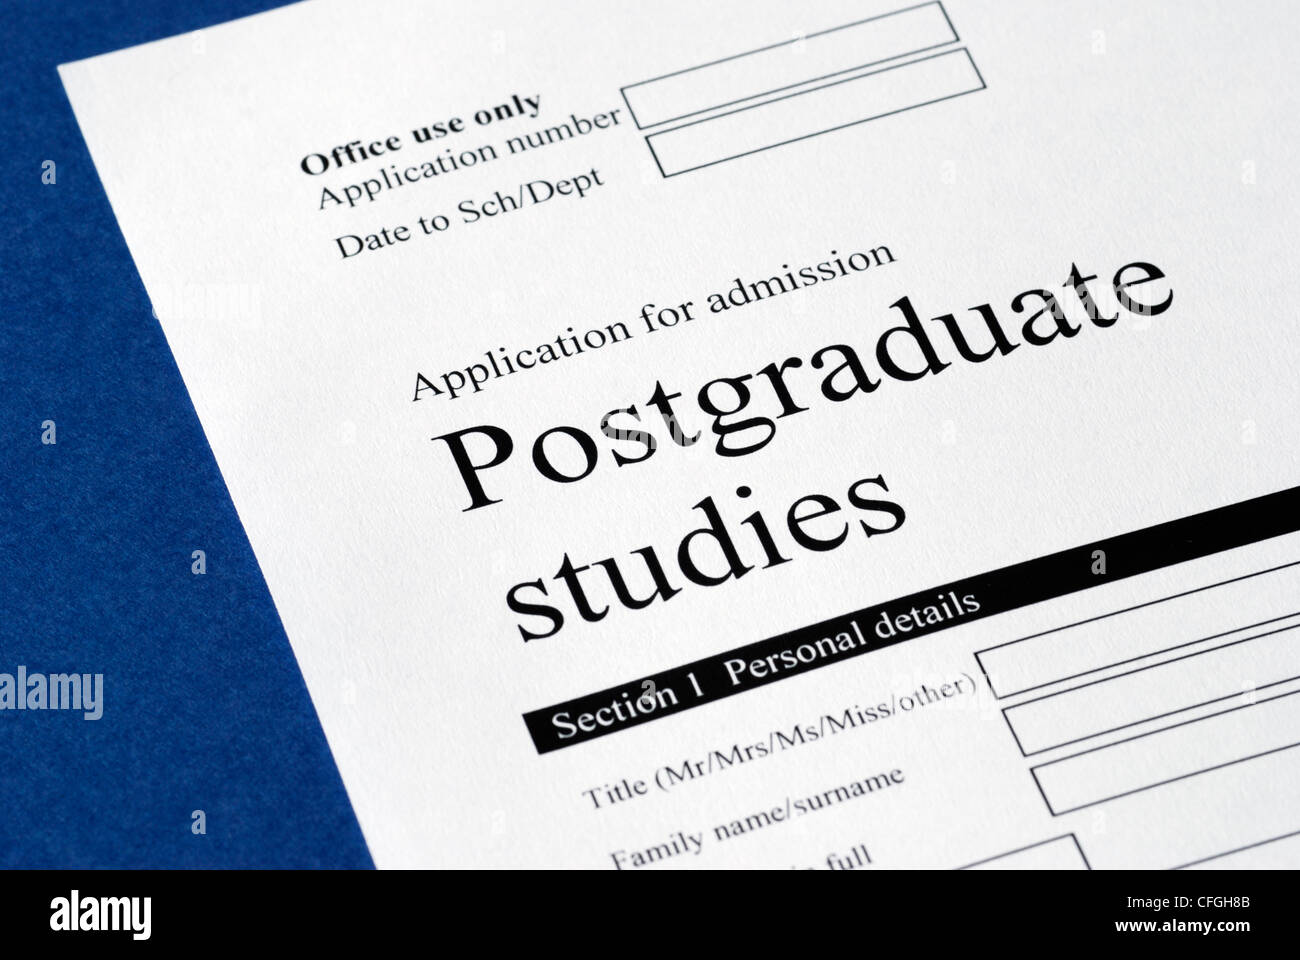 Postgraduate studies application form Stock Photo